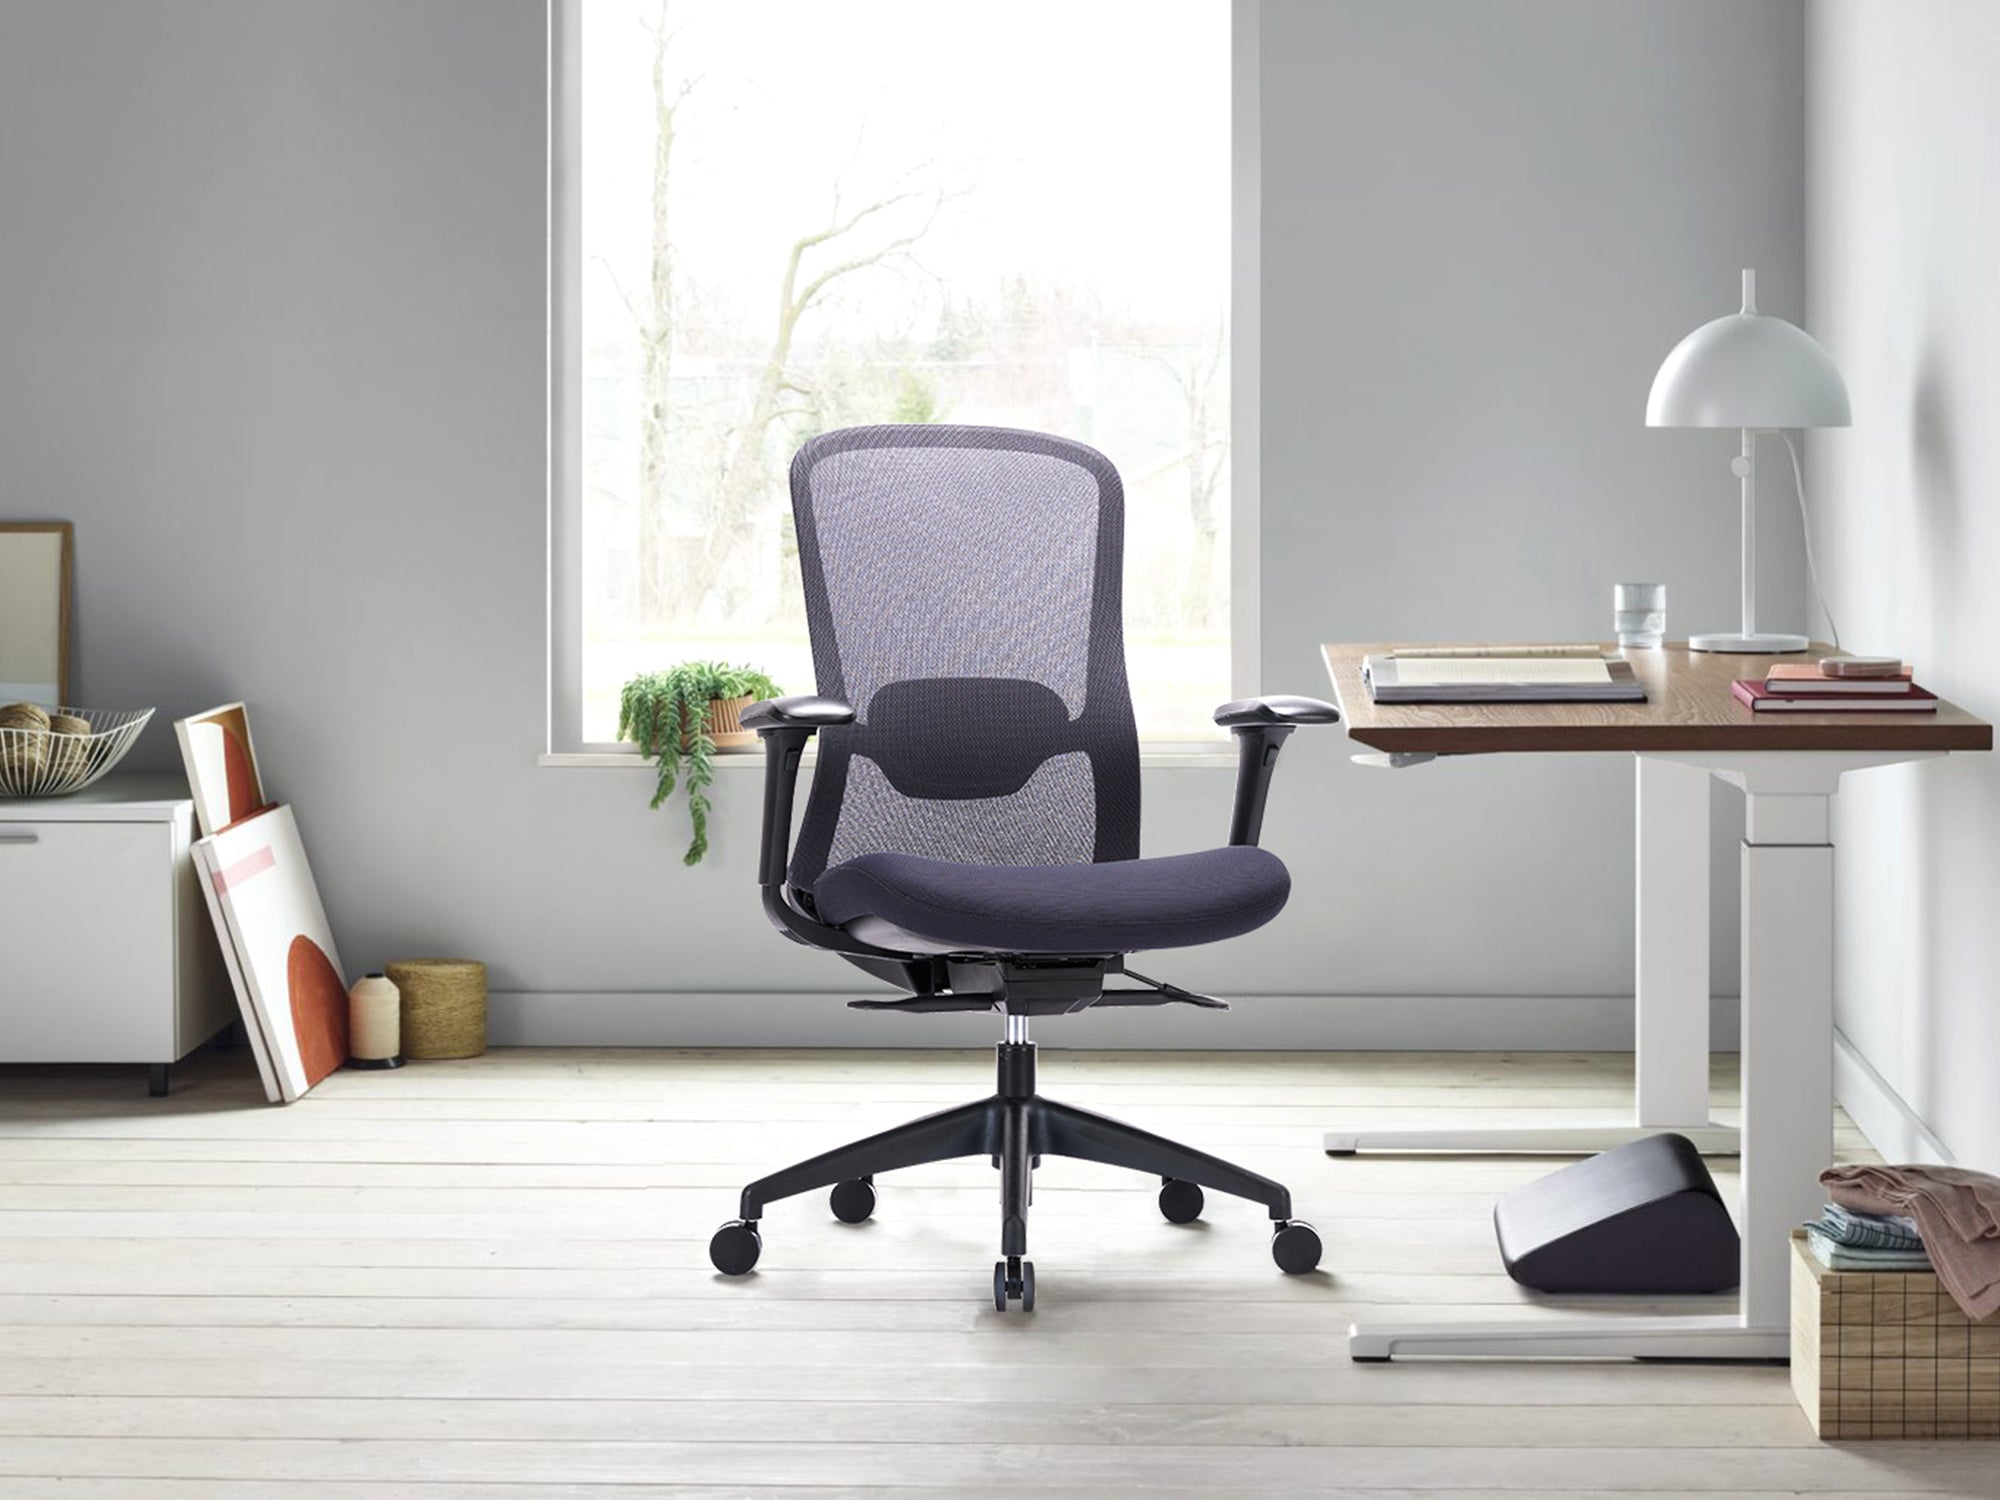 COLAMY KIRIN Ergonomic Mesh Office Chair 300lbs Mid-Back Desk Chair